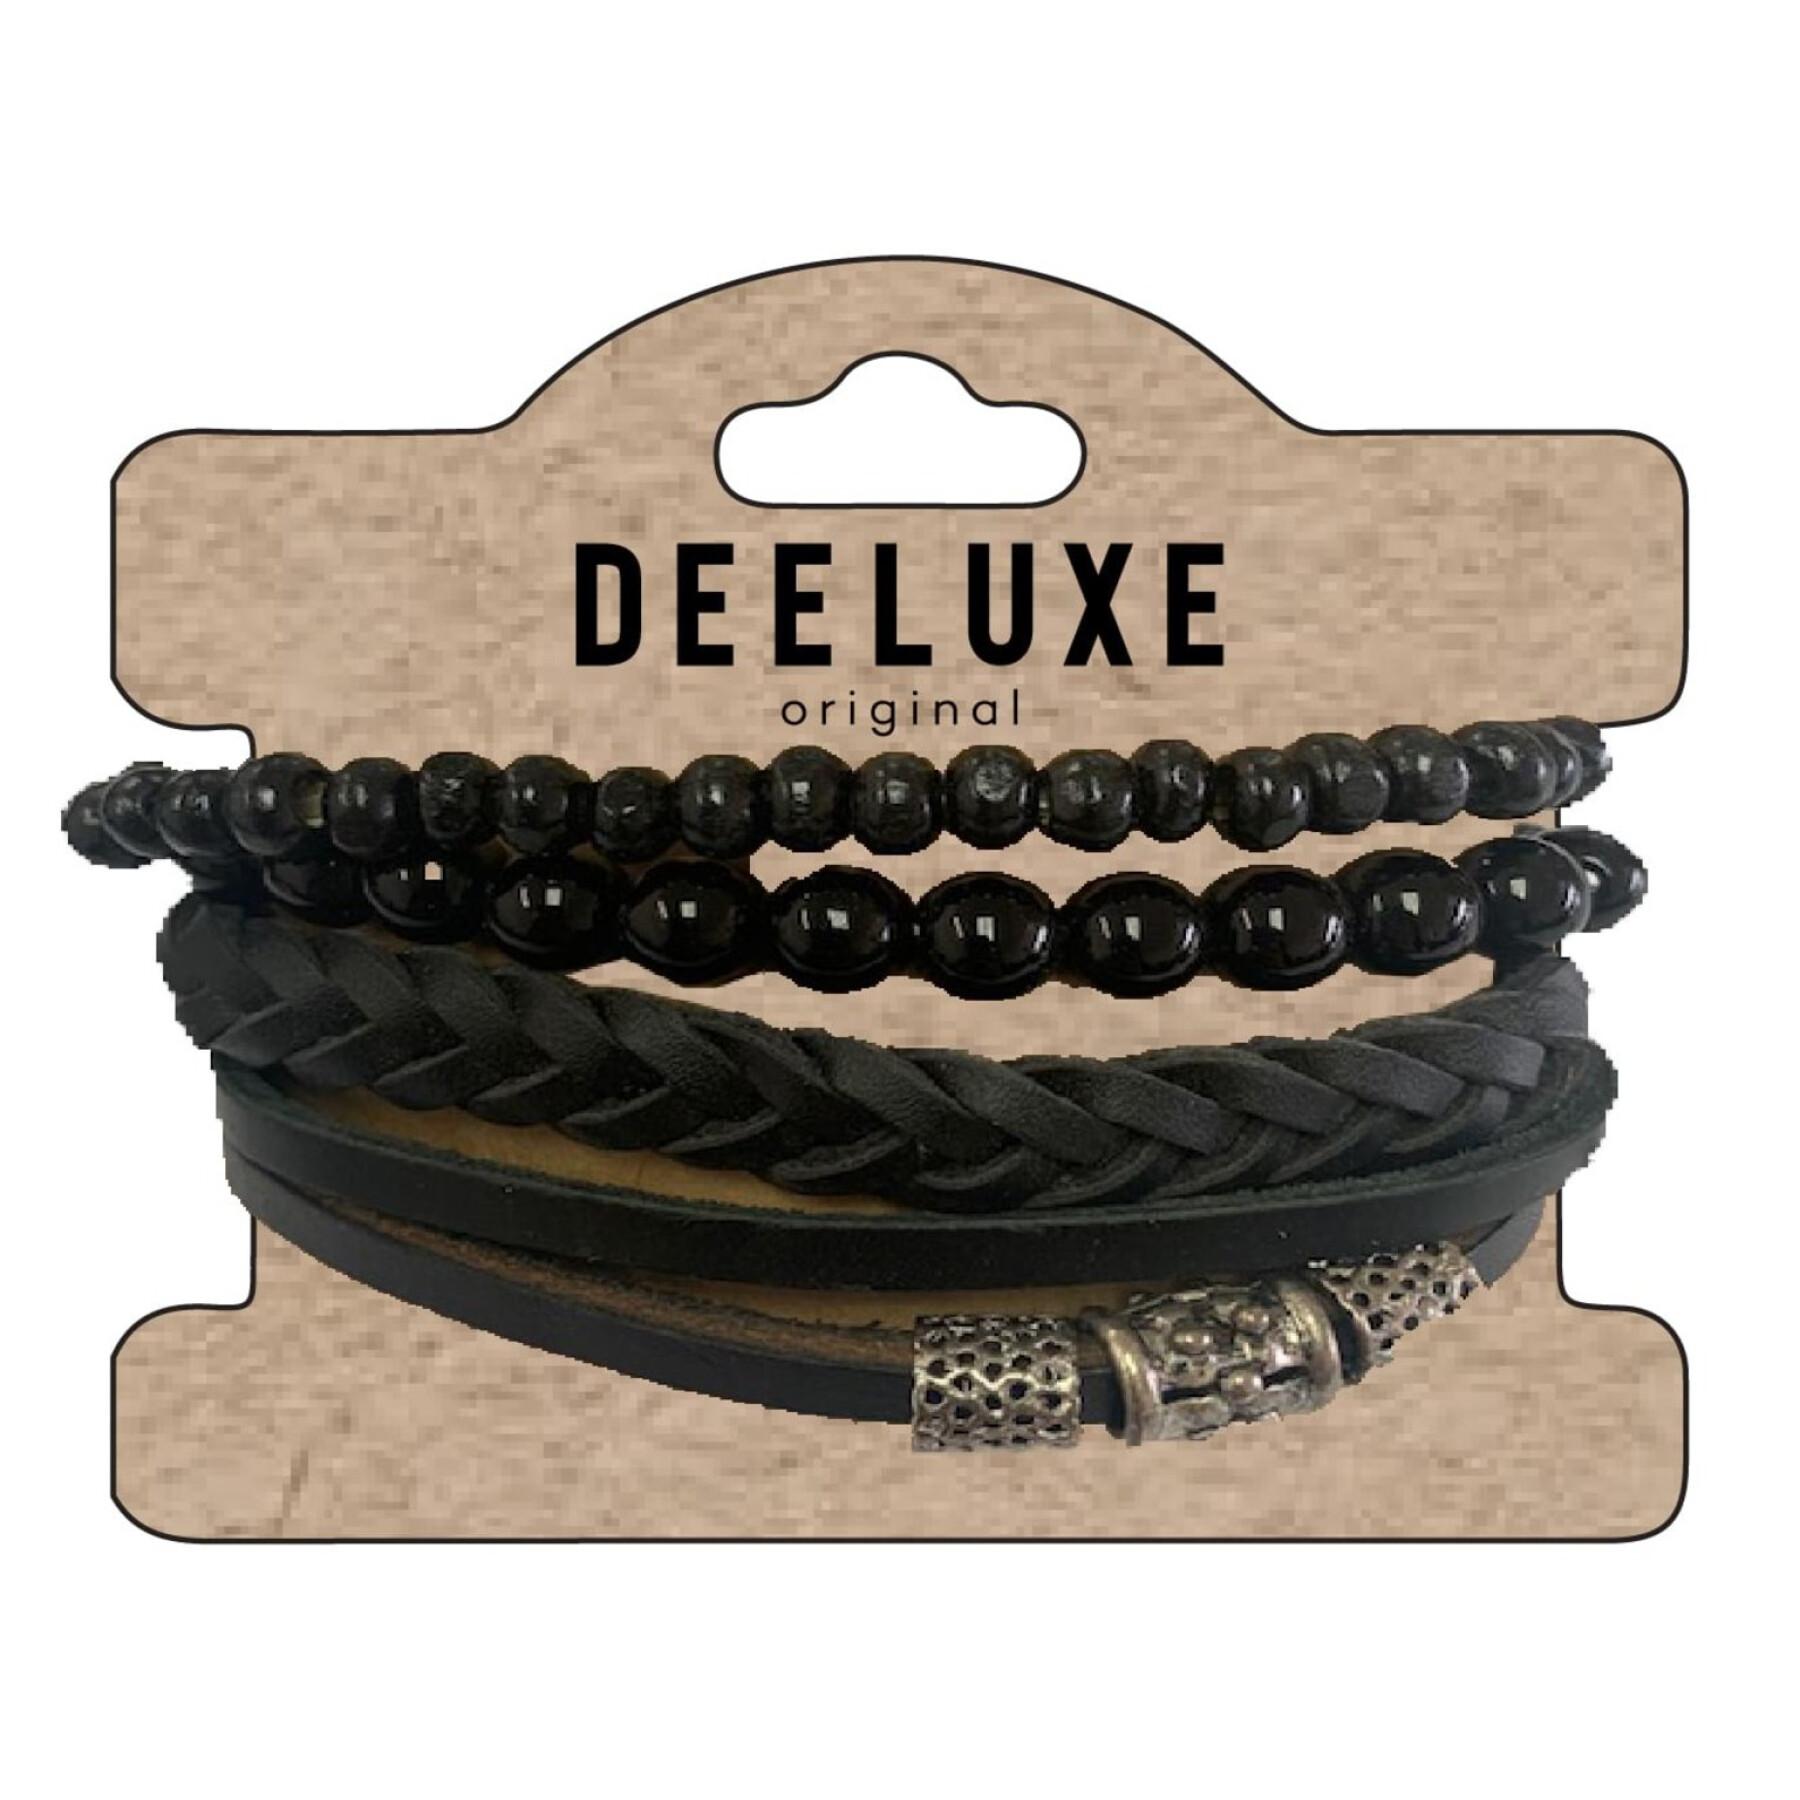 Bracelets Deeluxe authentic